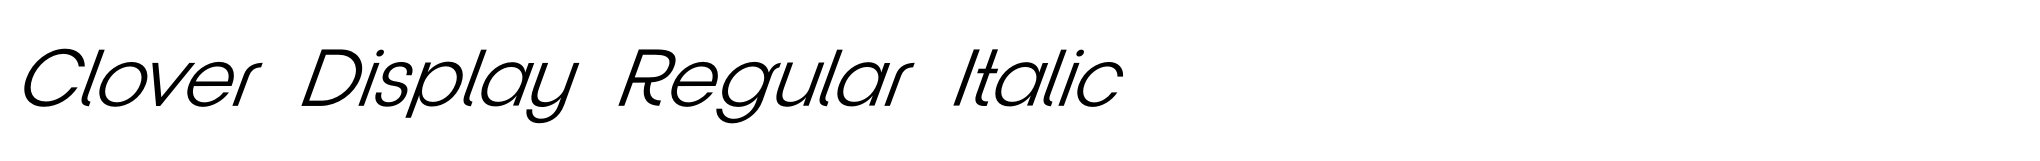 Clover Display Regular Italic image